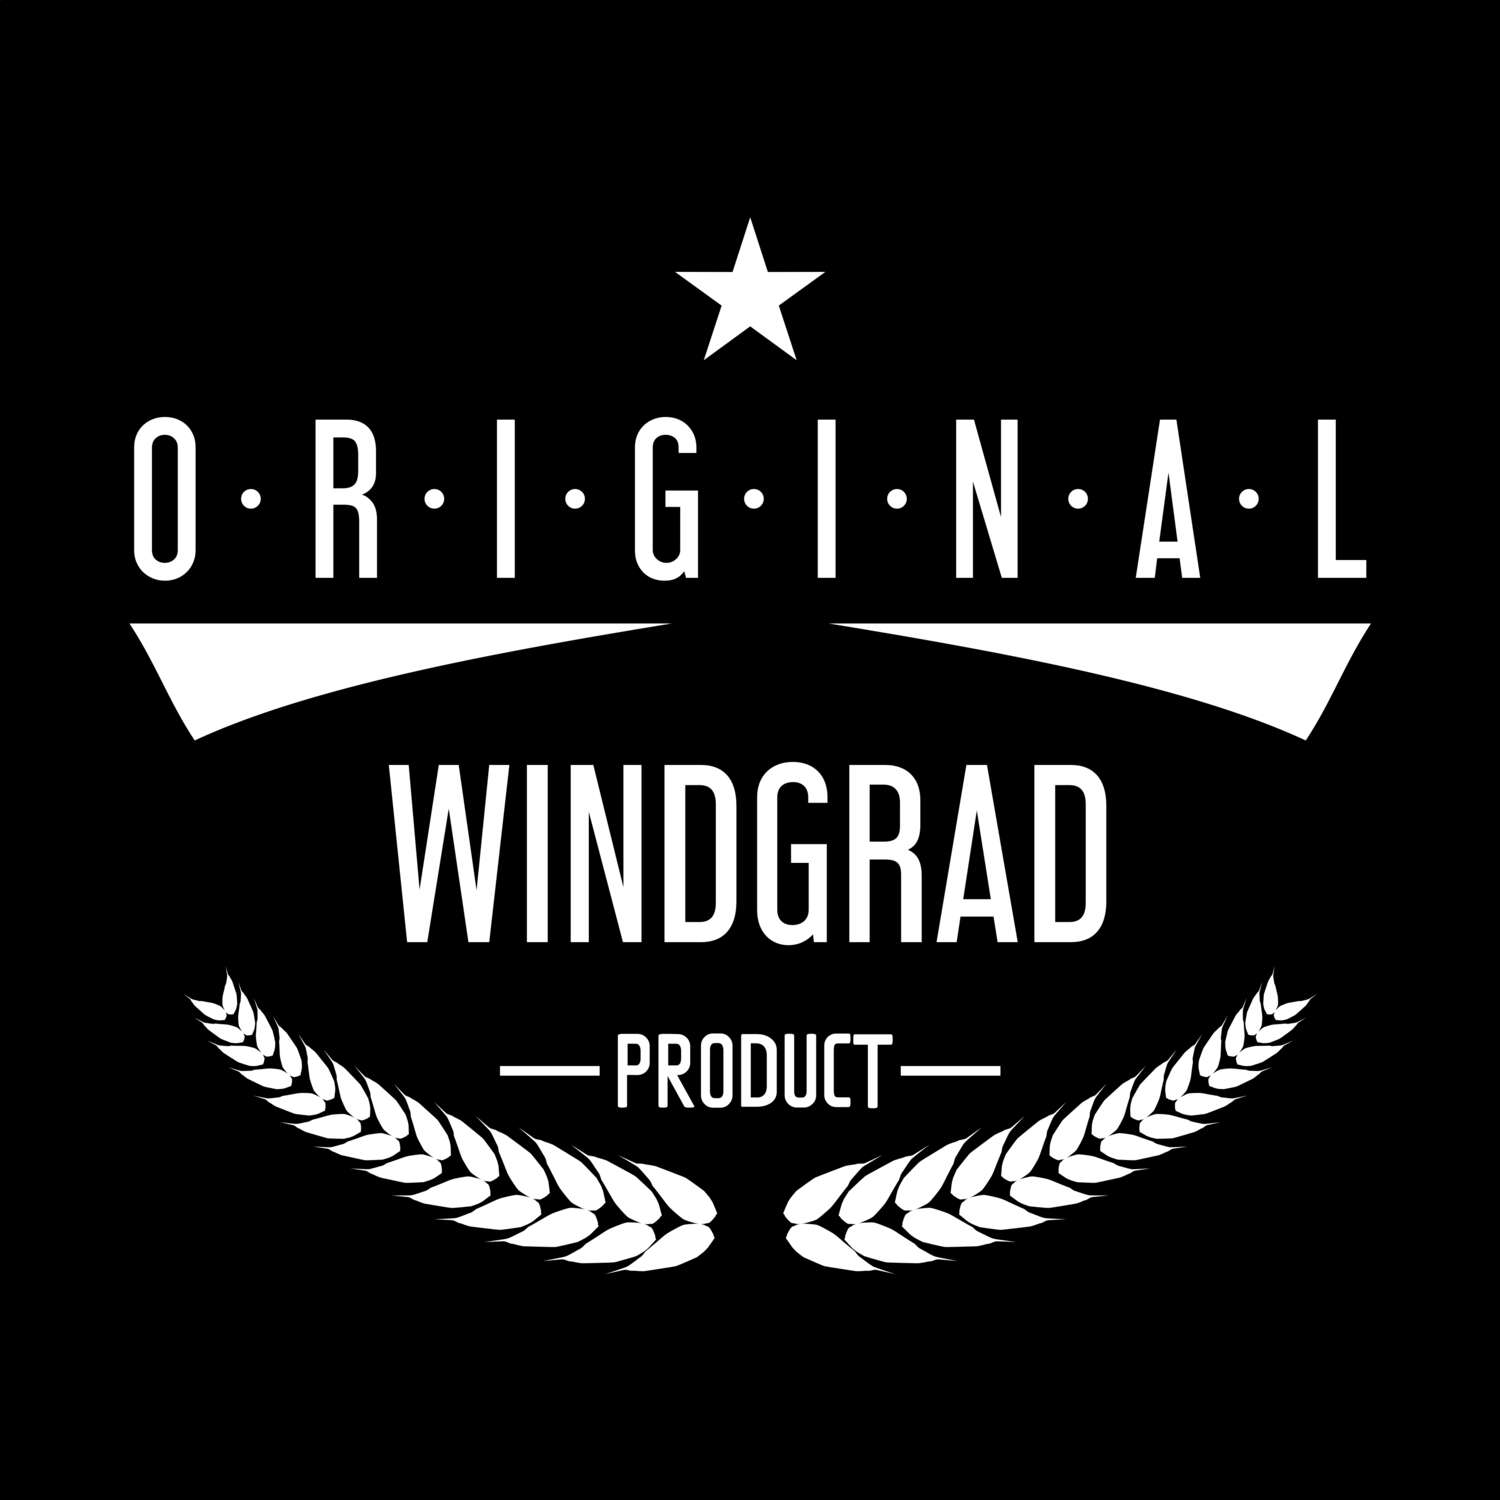 Windgrad T-Shirt »Original Product«